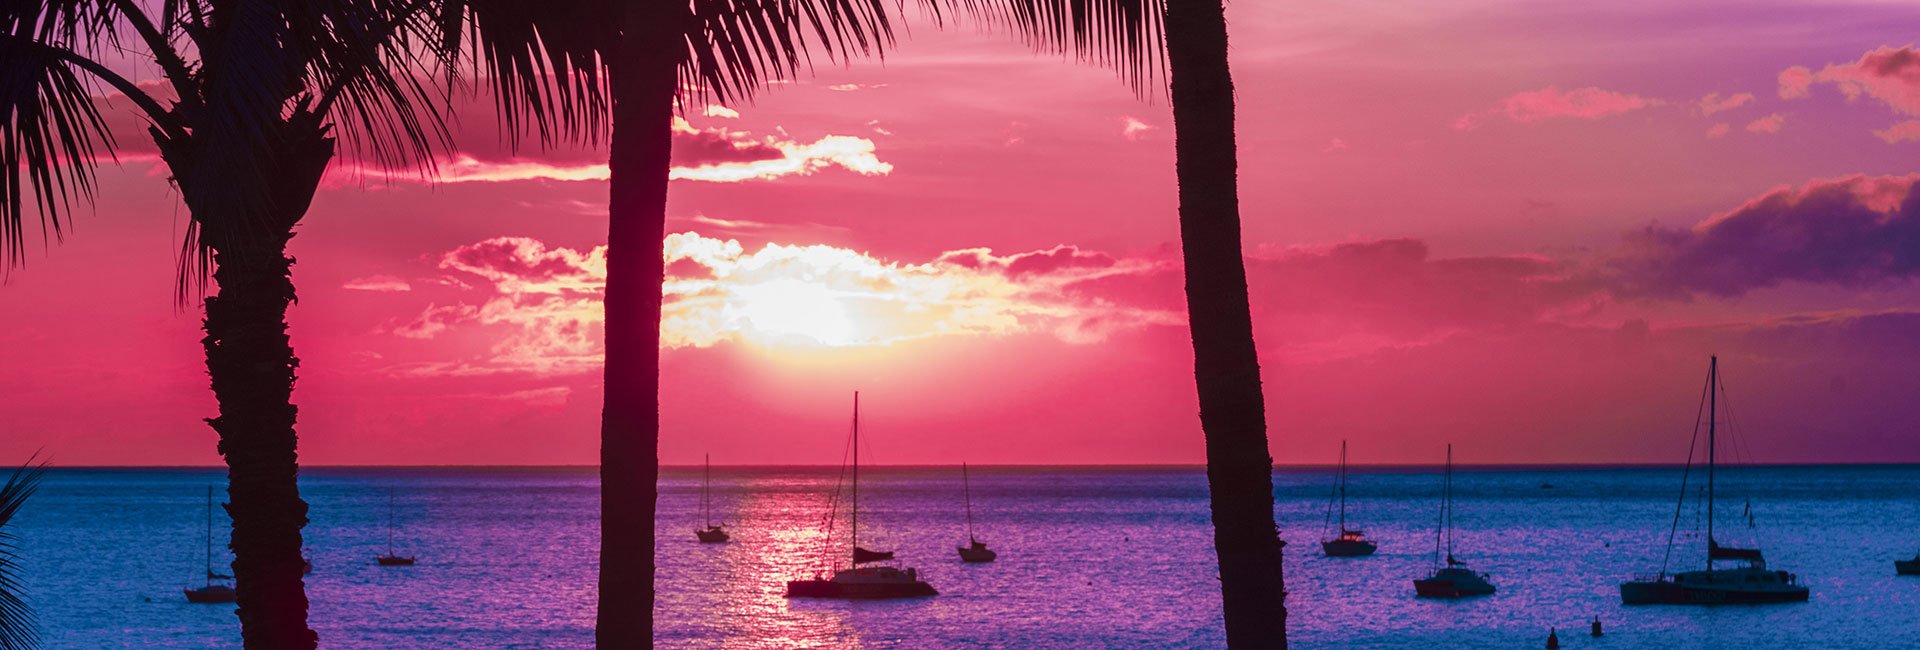 Pink sunset